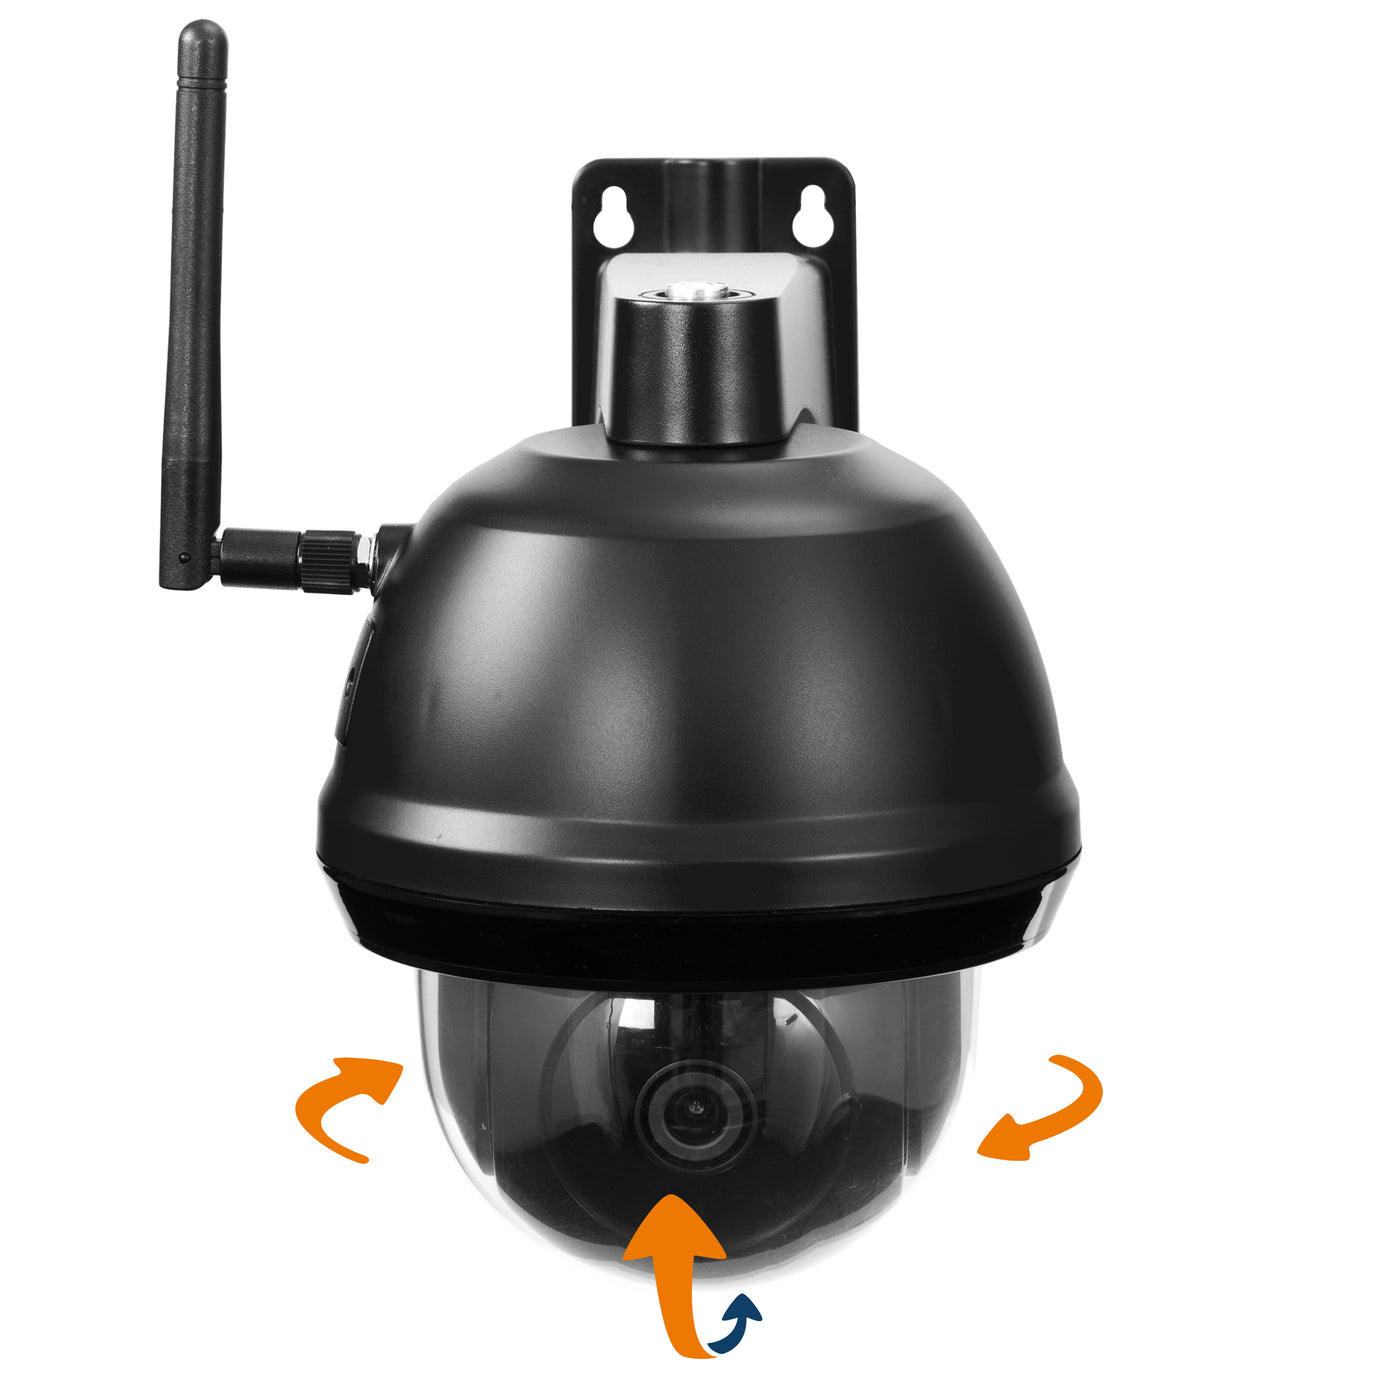 Alecto DVC266IP - Remote controlled outdoor Wi-Fi camera - Black